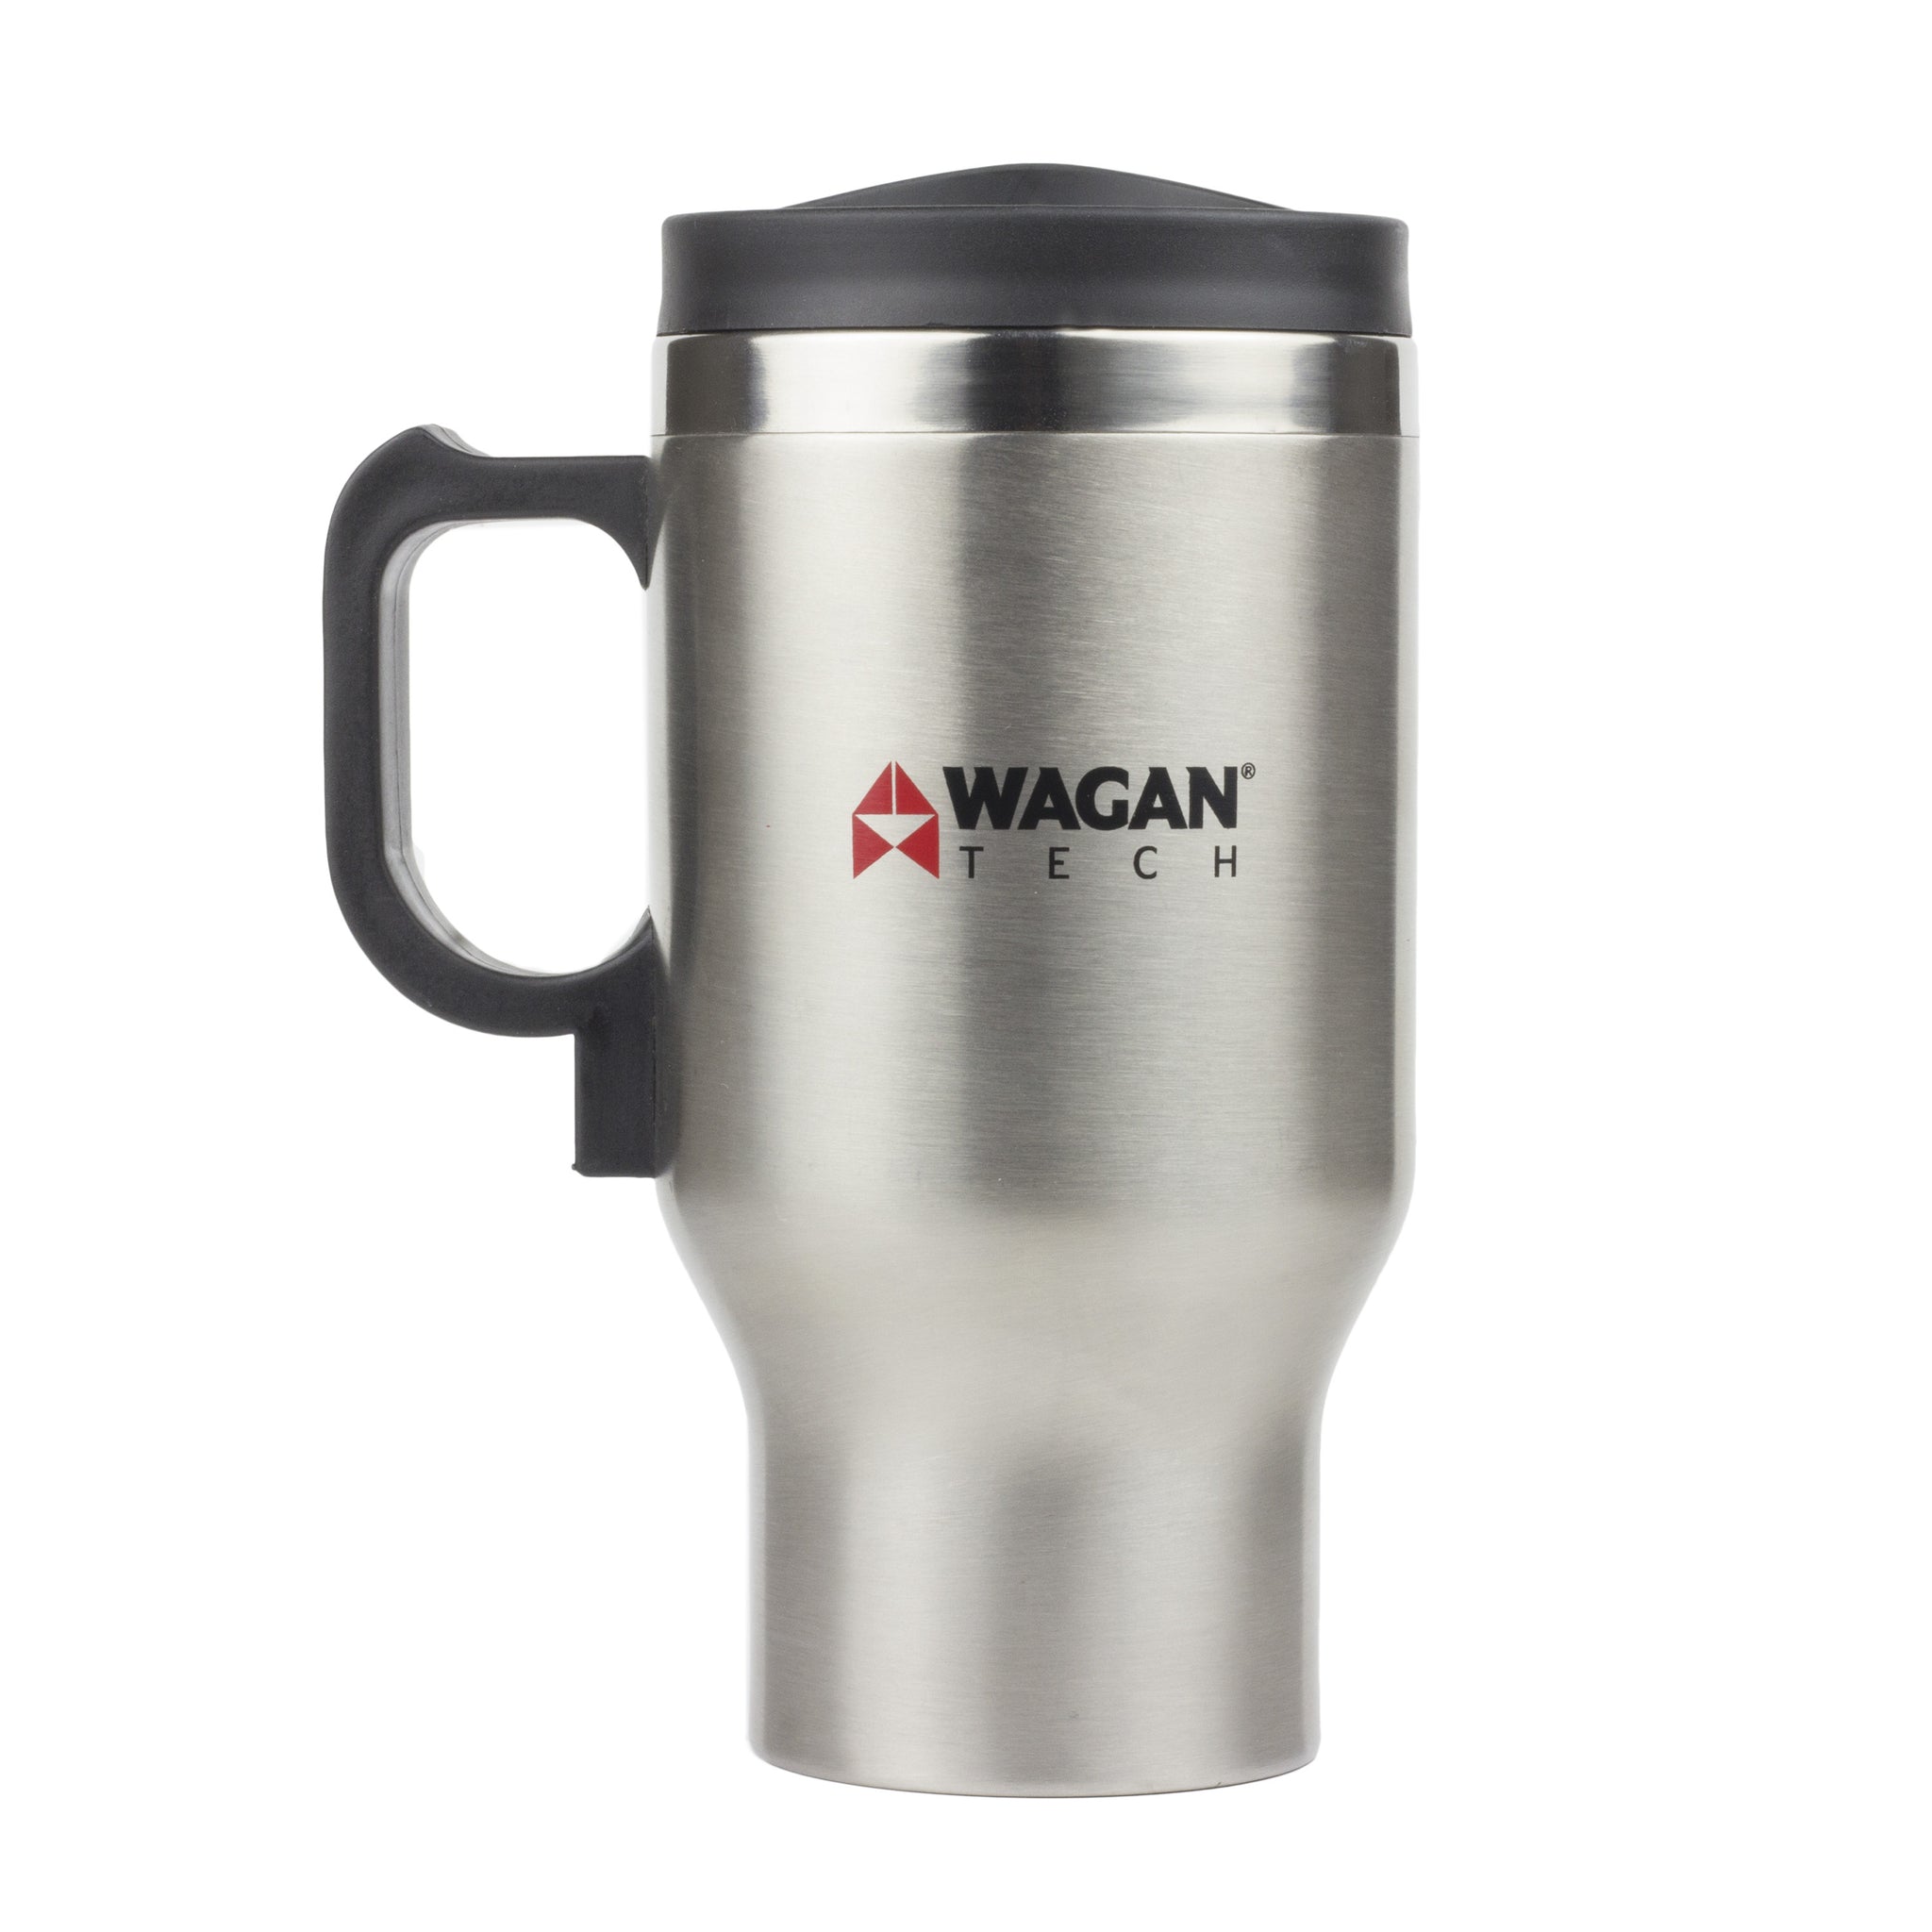 Wagan 12V Heated Travel Mug - 2 Pack - The Warming Store